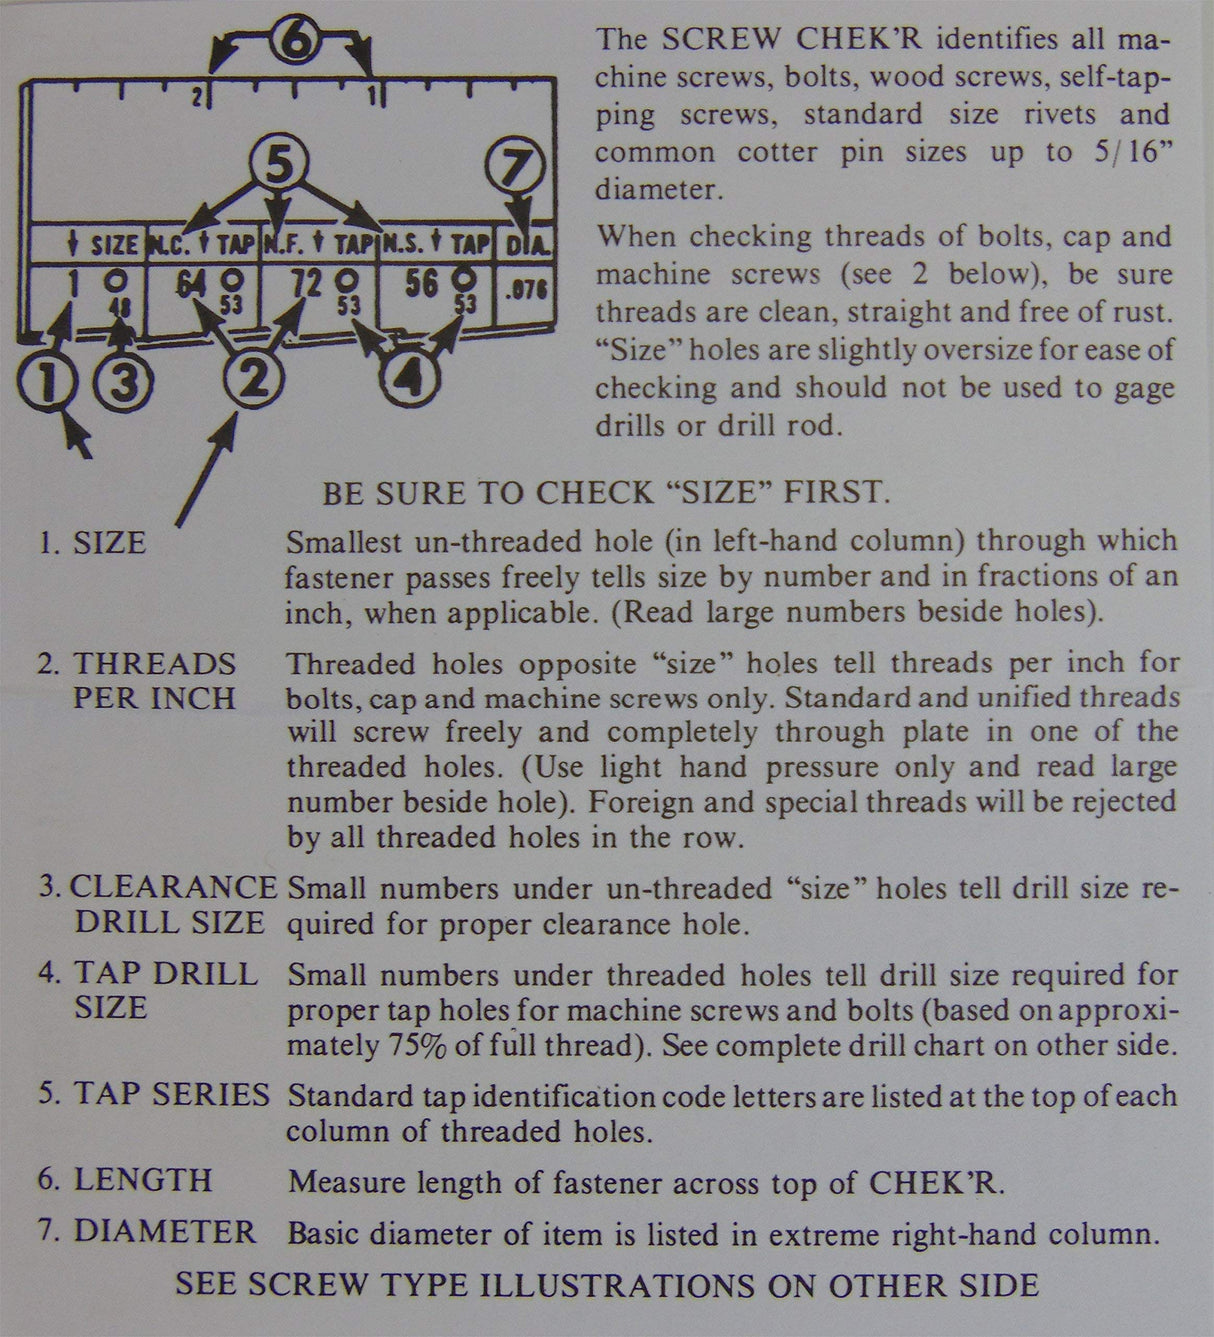 Screw Chek’r SAE/ Inch Screw Thread Size Gauge (No. 1 to 5/16) 1/8 Inch Heavy Gauge Steel Screw Checker, Made in USA